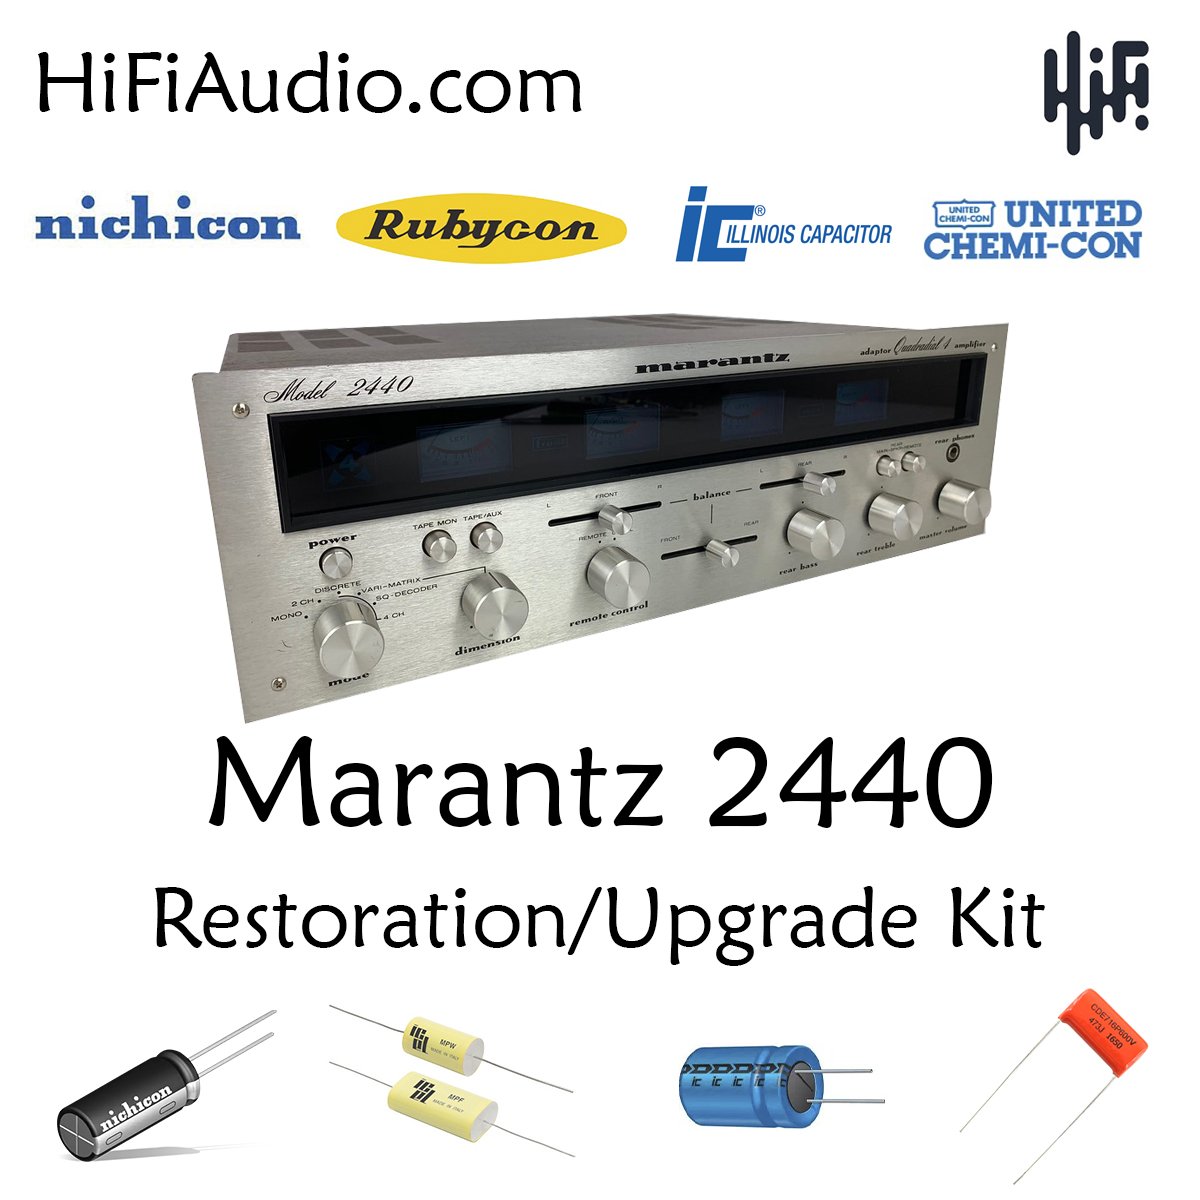 Marantz 2440 restoration kit